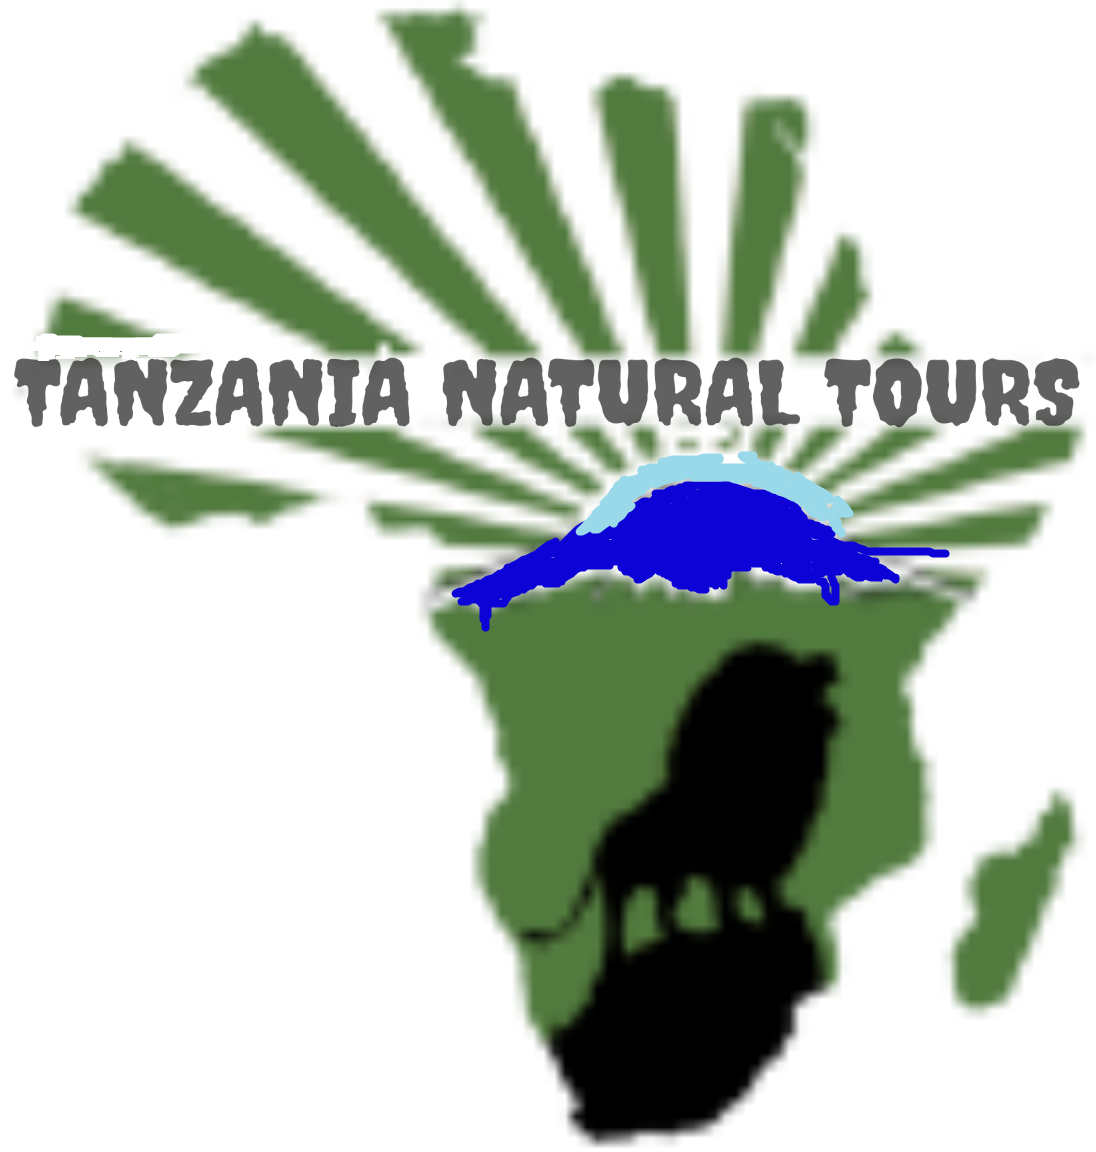 Serengeti National Park animals and history in Tanzania